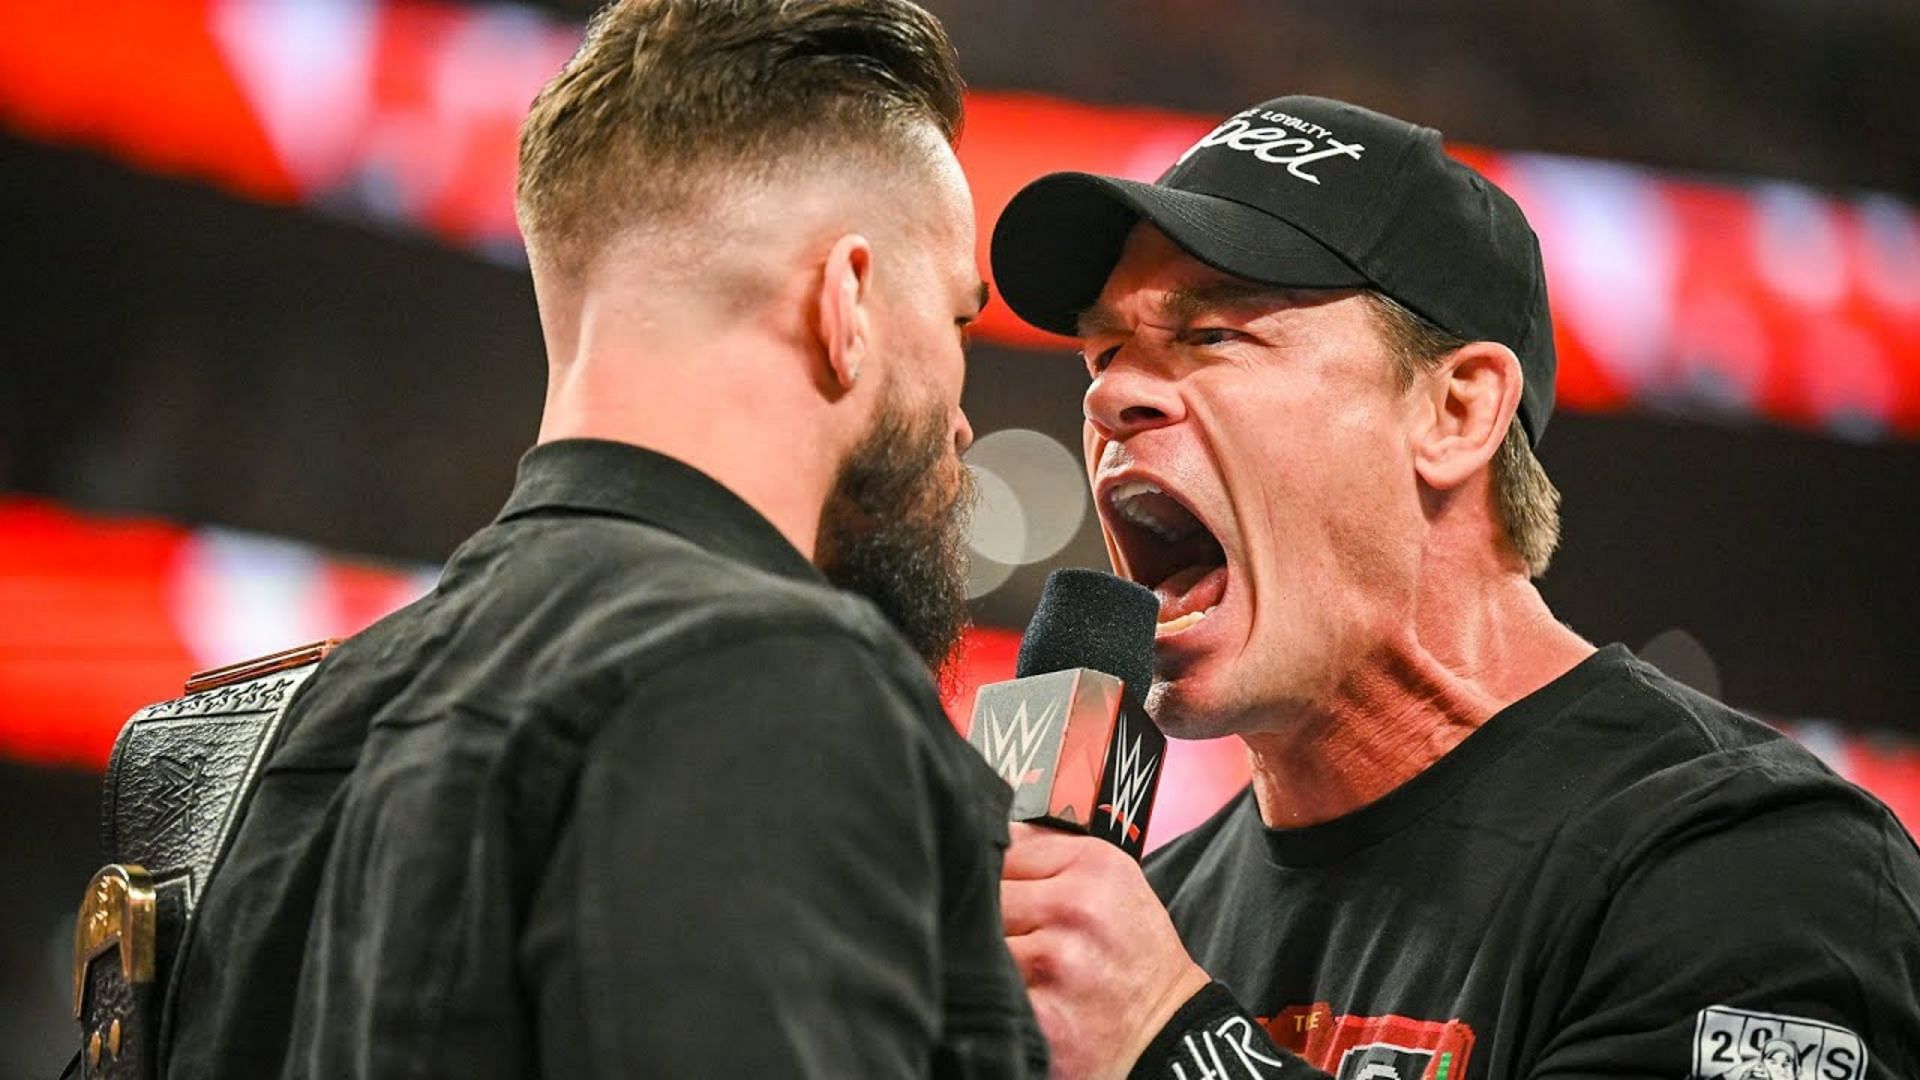 John Cena lost to Austin Theory at WWE WrestleMania 39